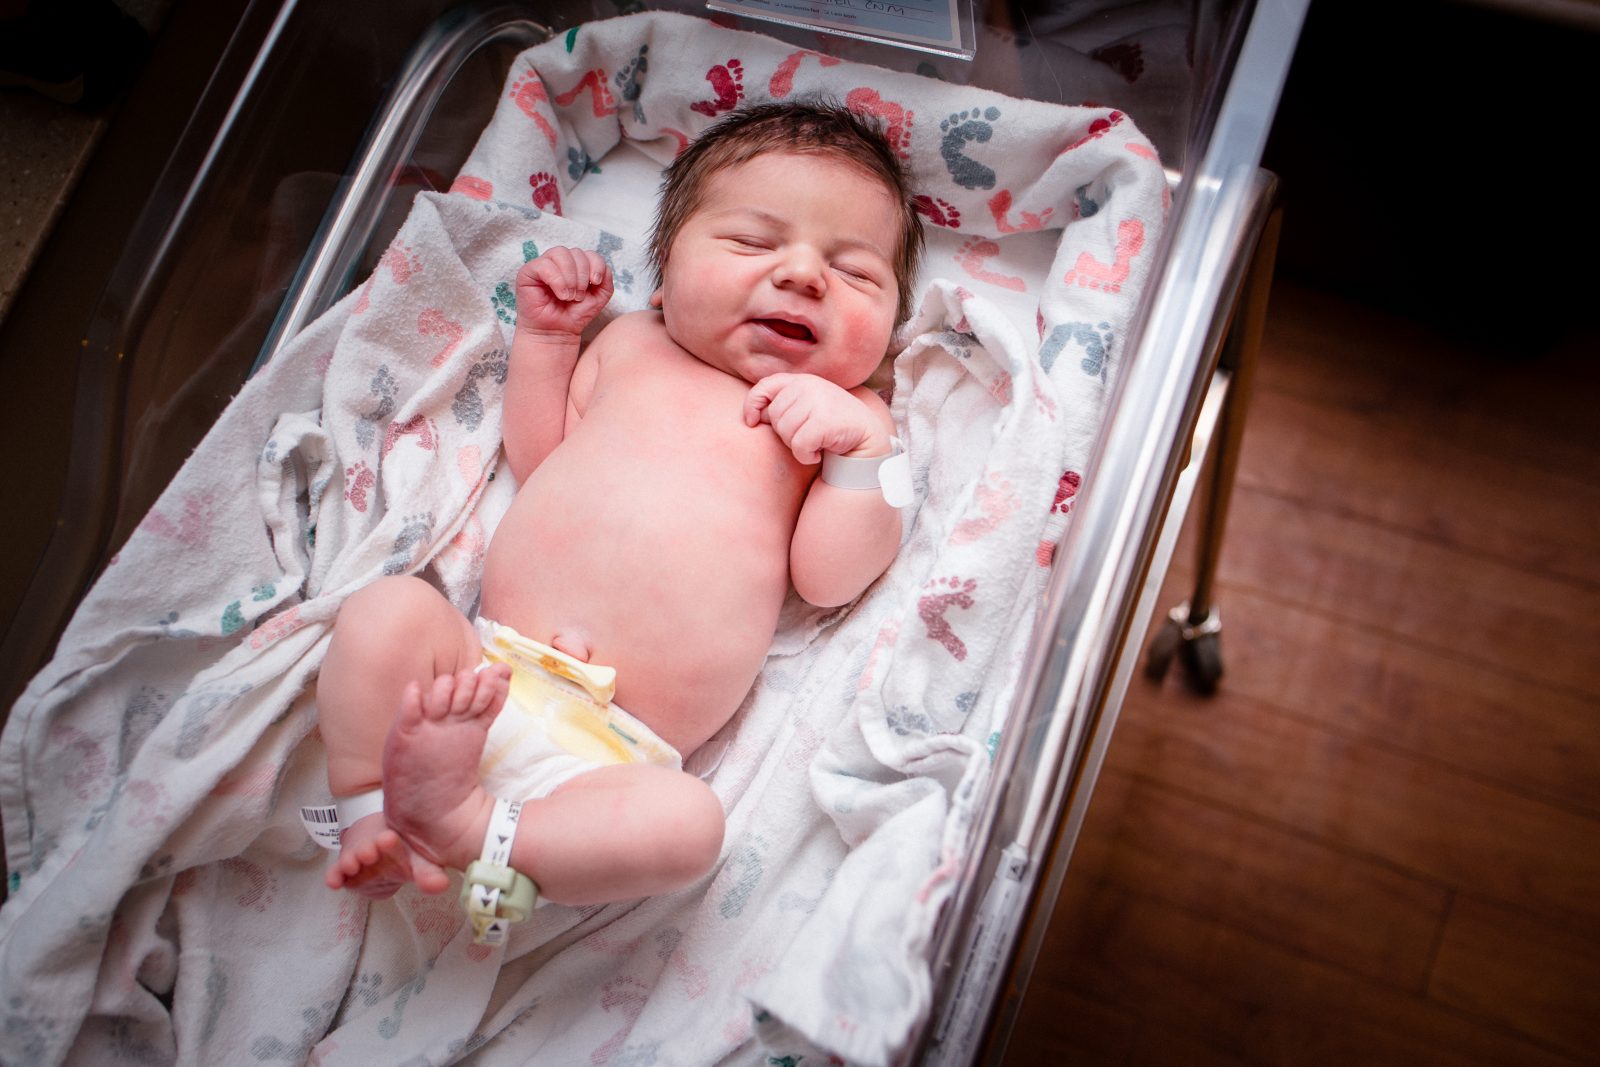 fresh 48 photo of new baby in hostpital bassinet